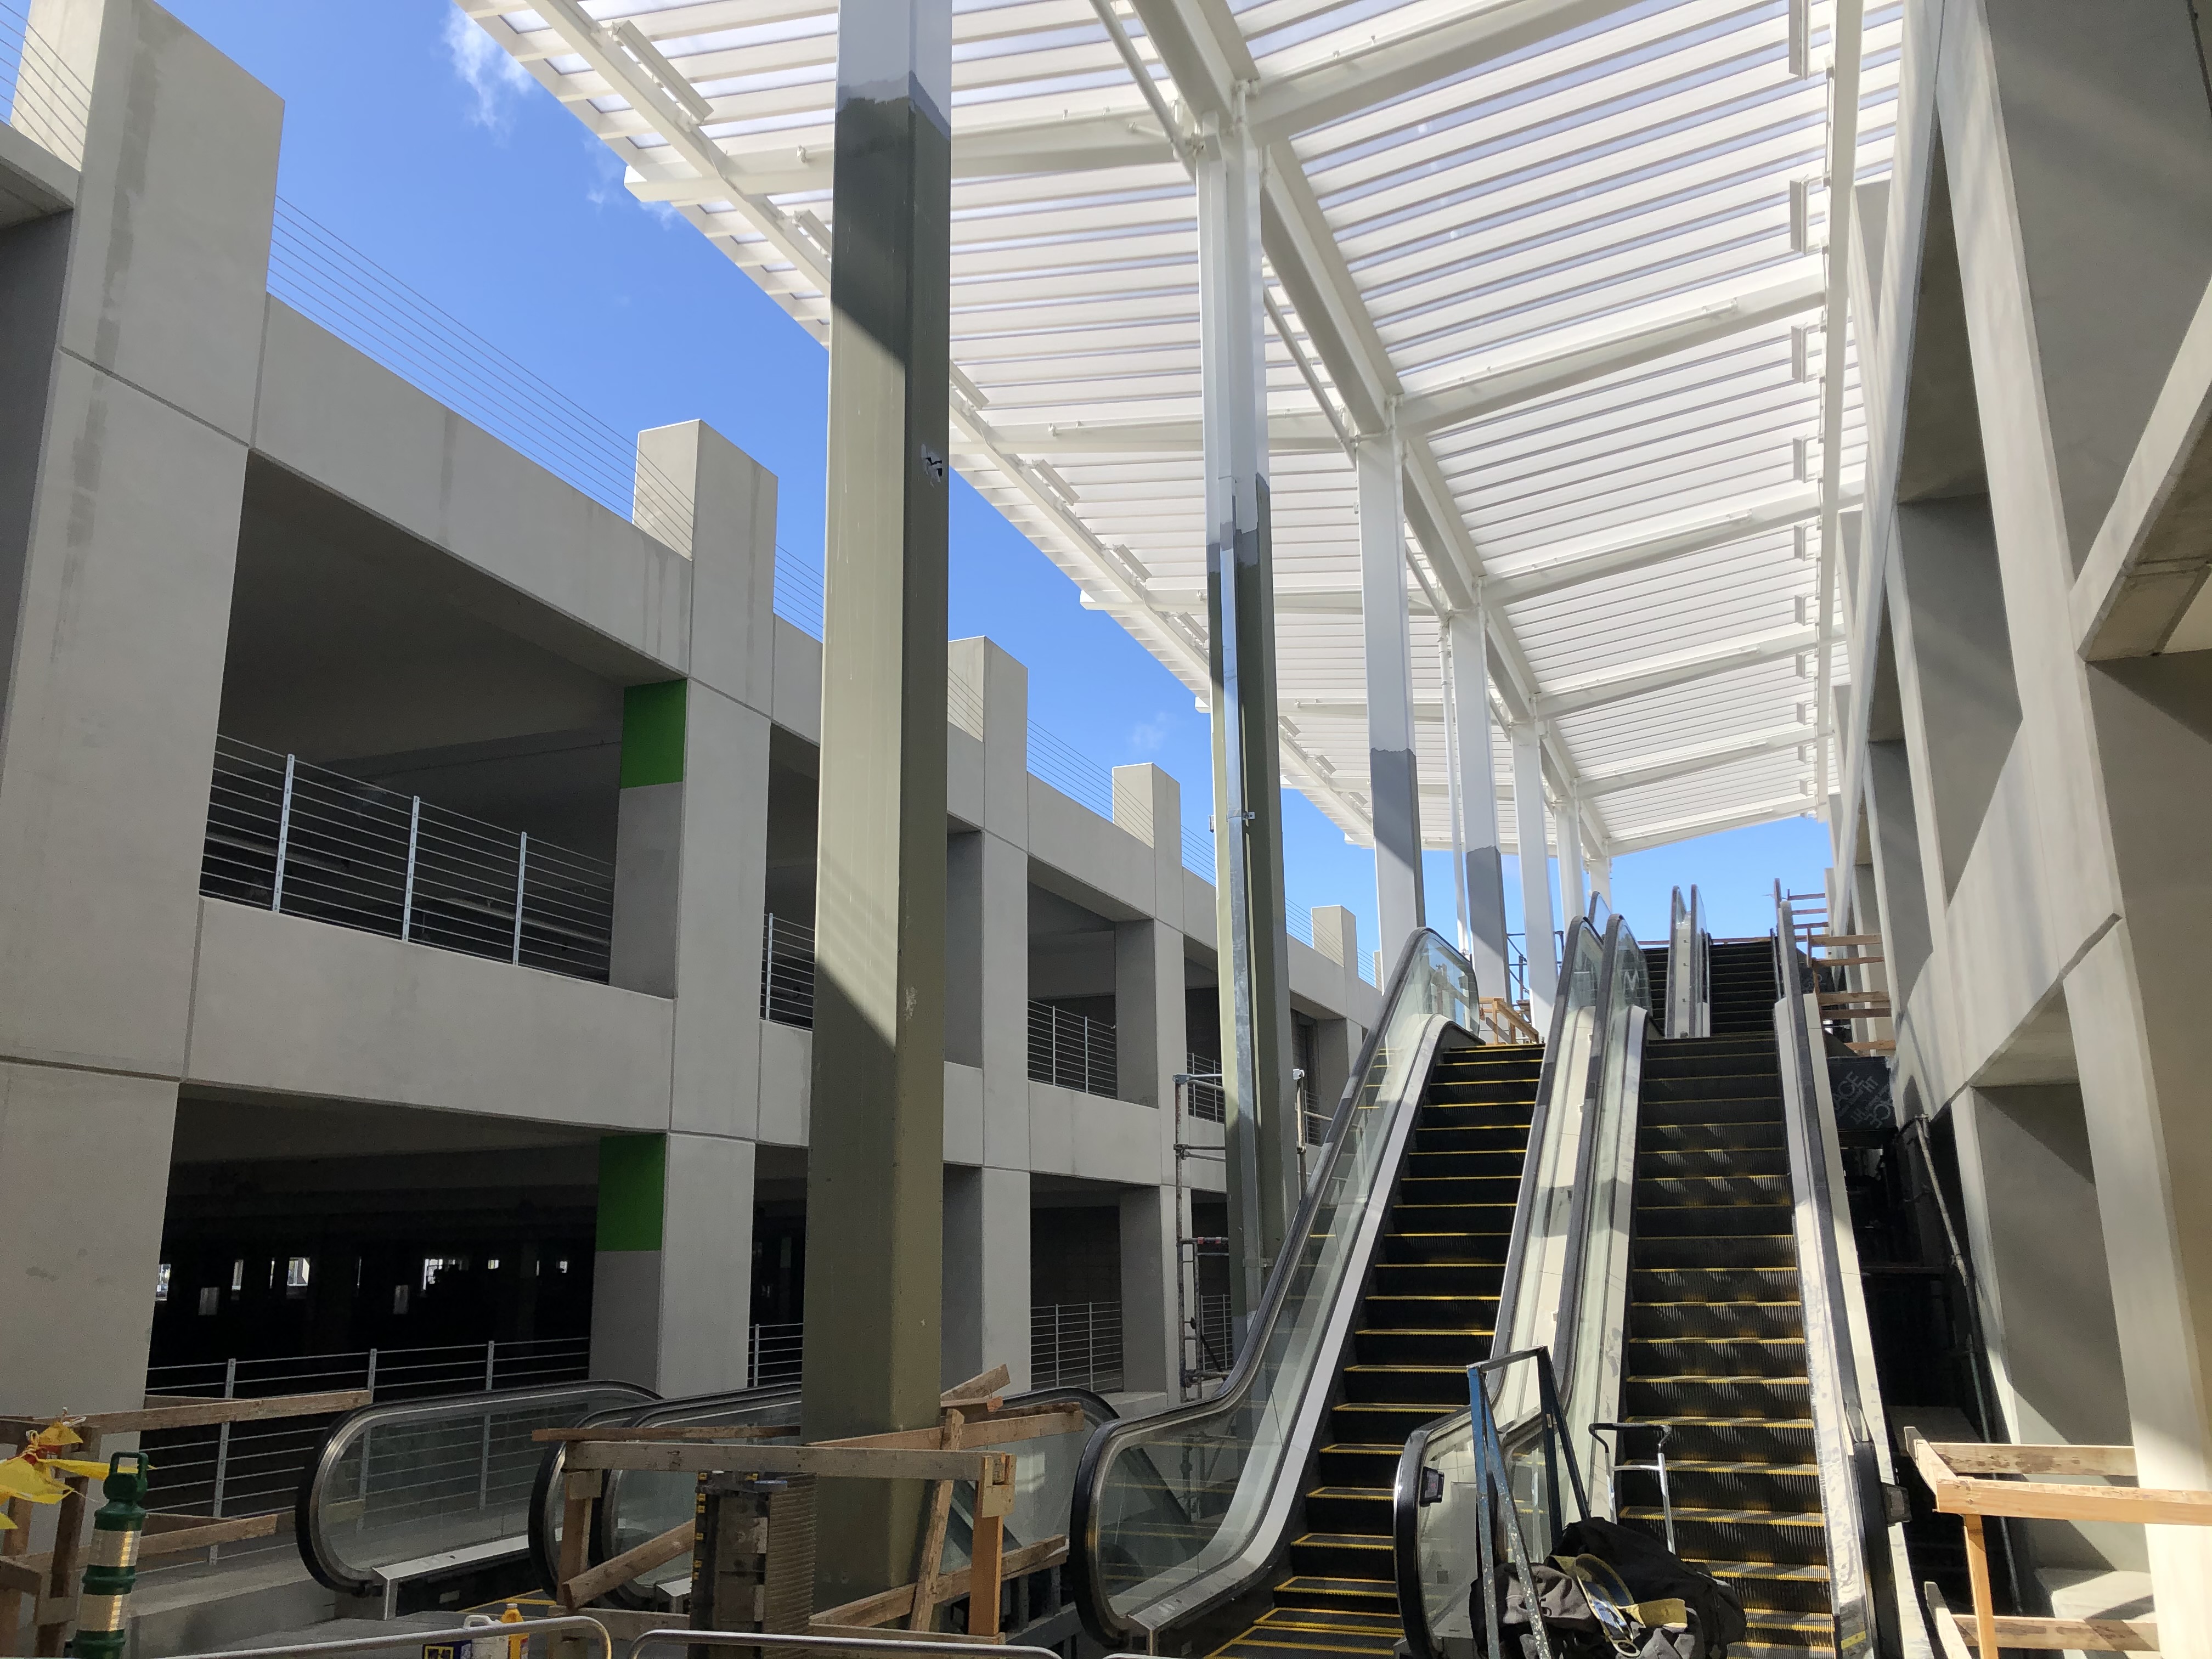 The escalator canopy at the Intermodal Transportation Facility-West.